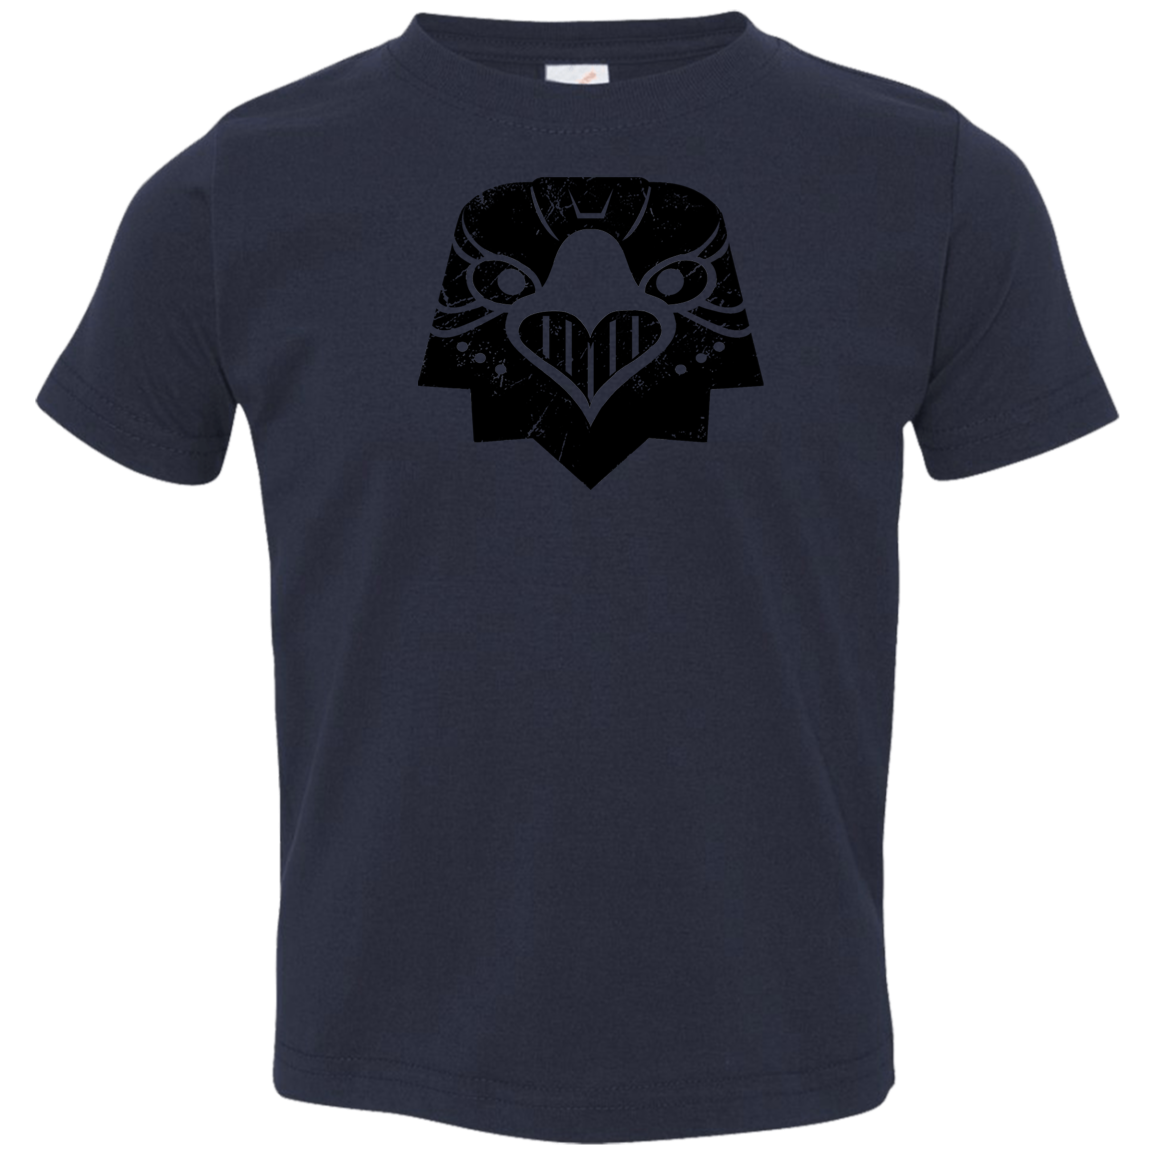 Black Distressed Emblem T-Shirts for Toddlers (Eagle/Eagle-Eye) - Dark Corps